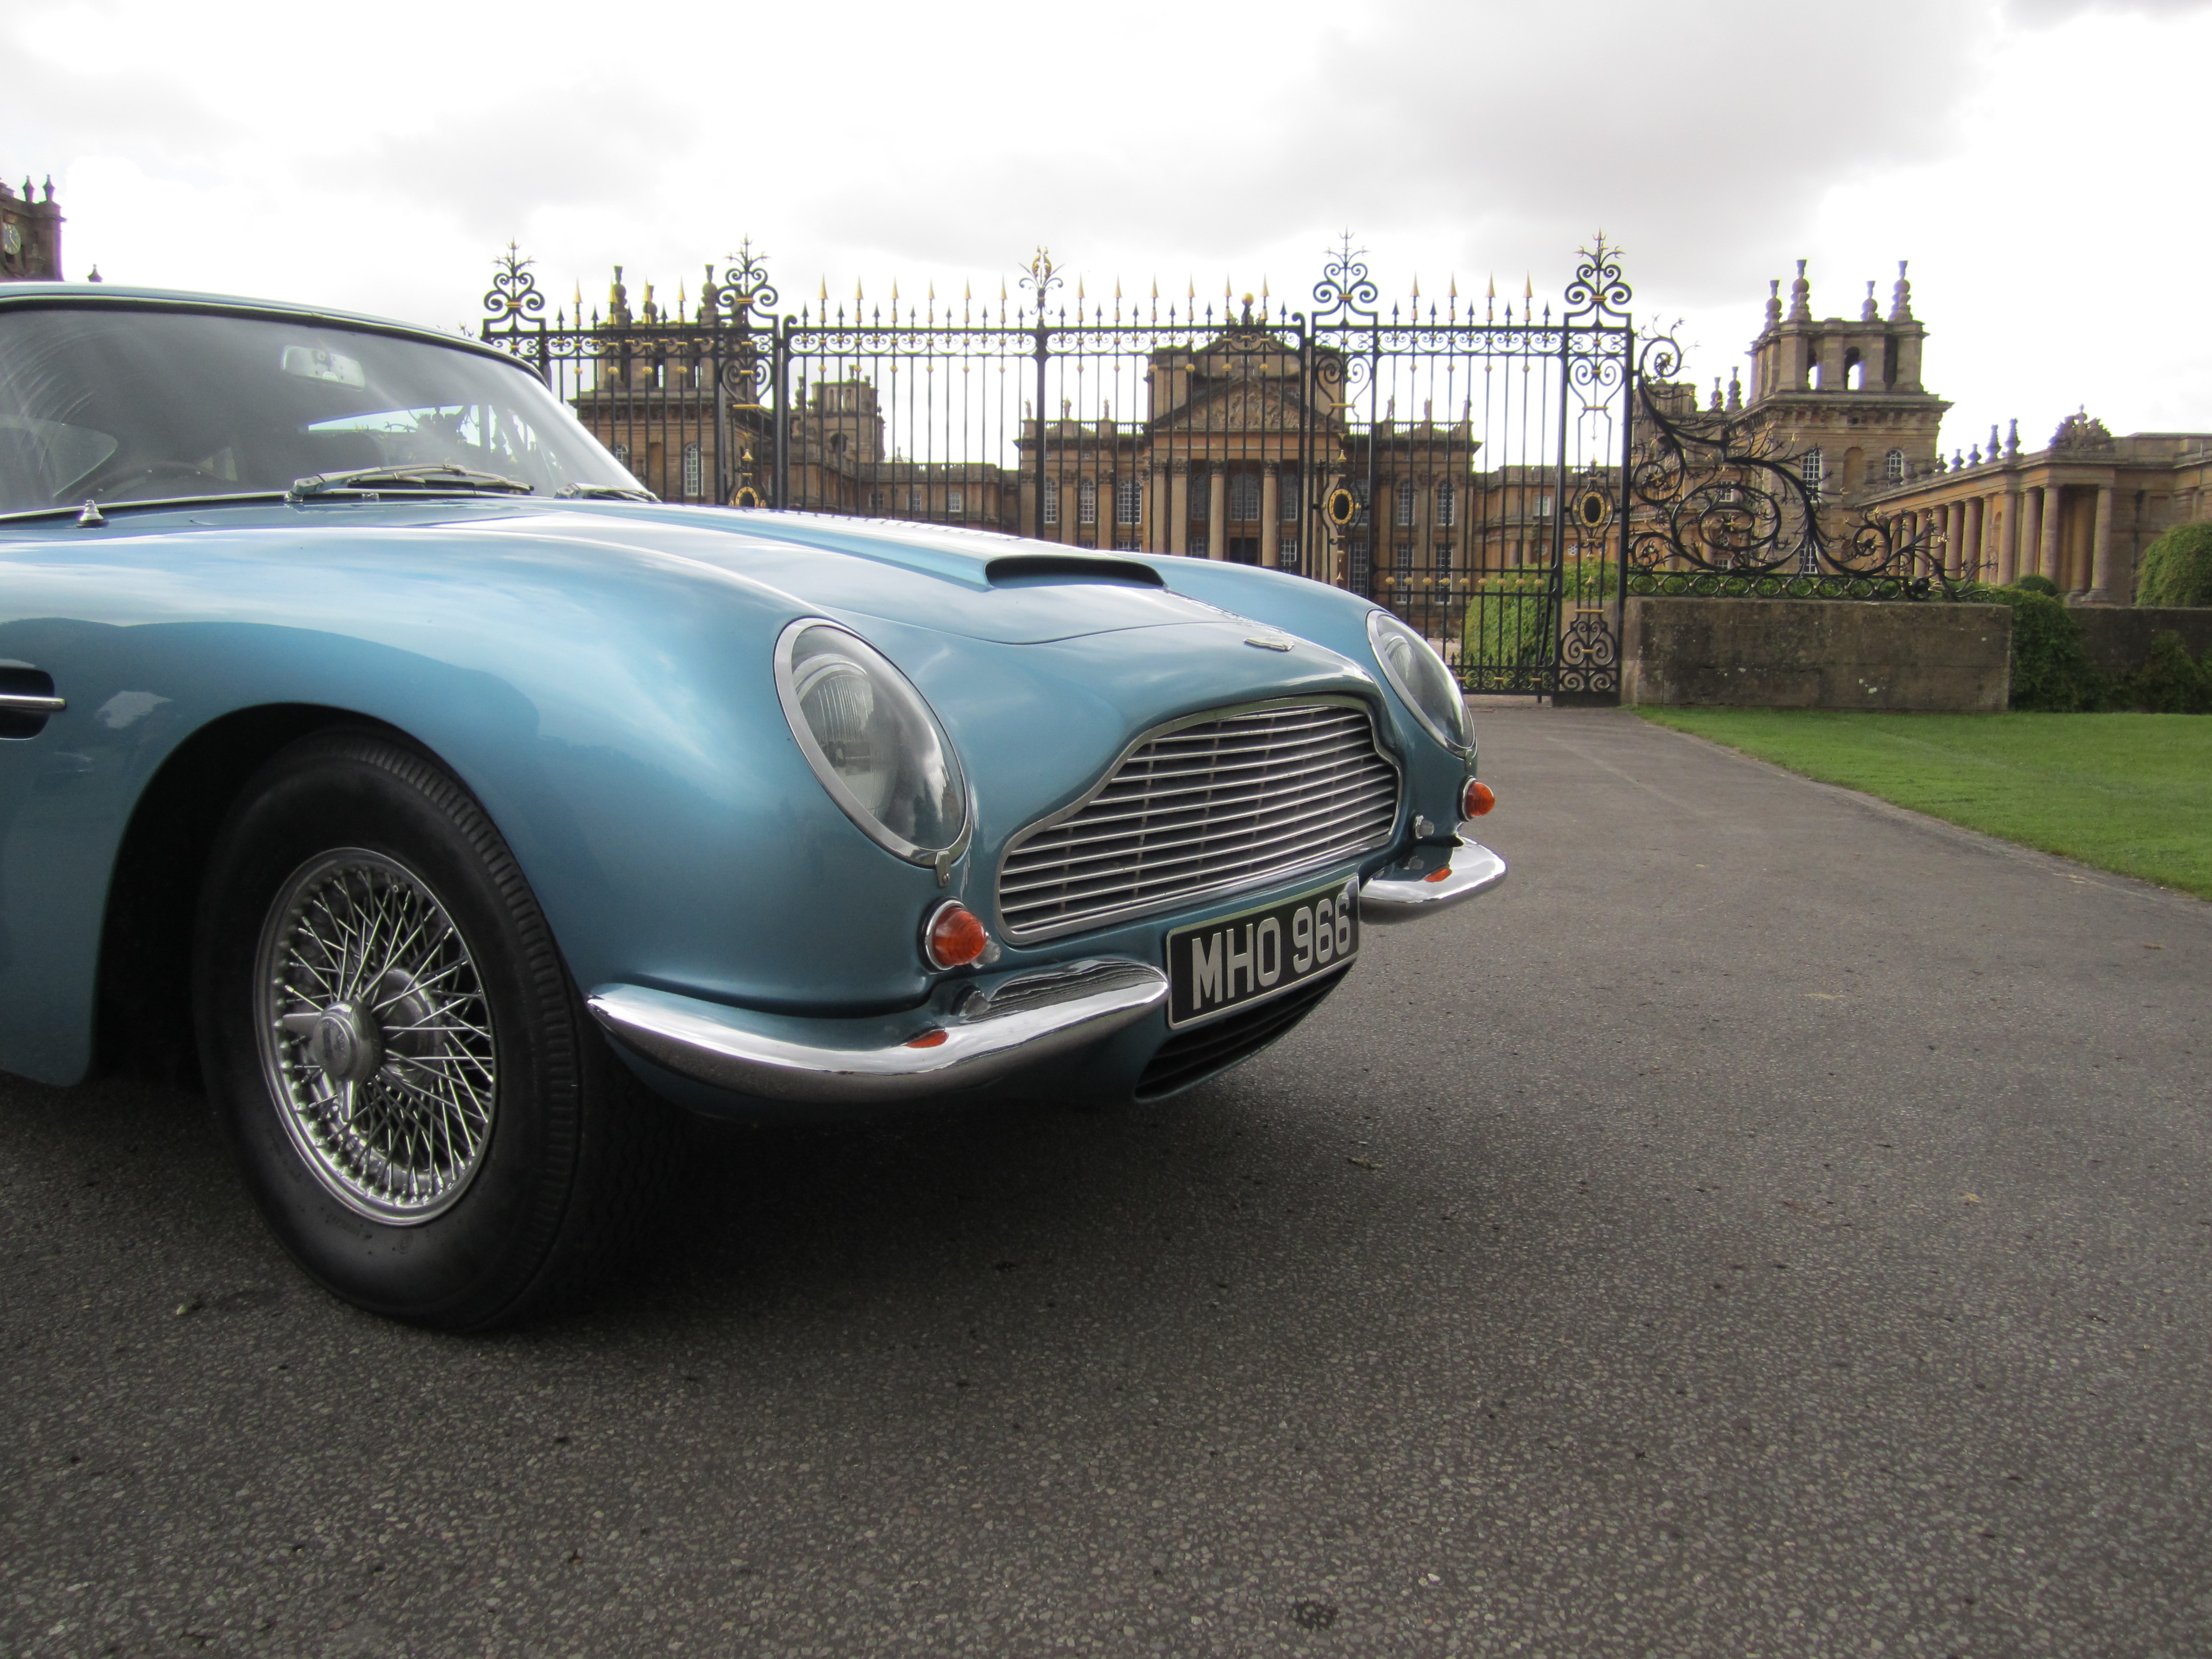 Aston Martin Celebrates 100 Years in 2013